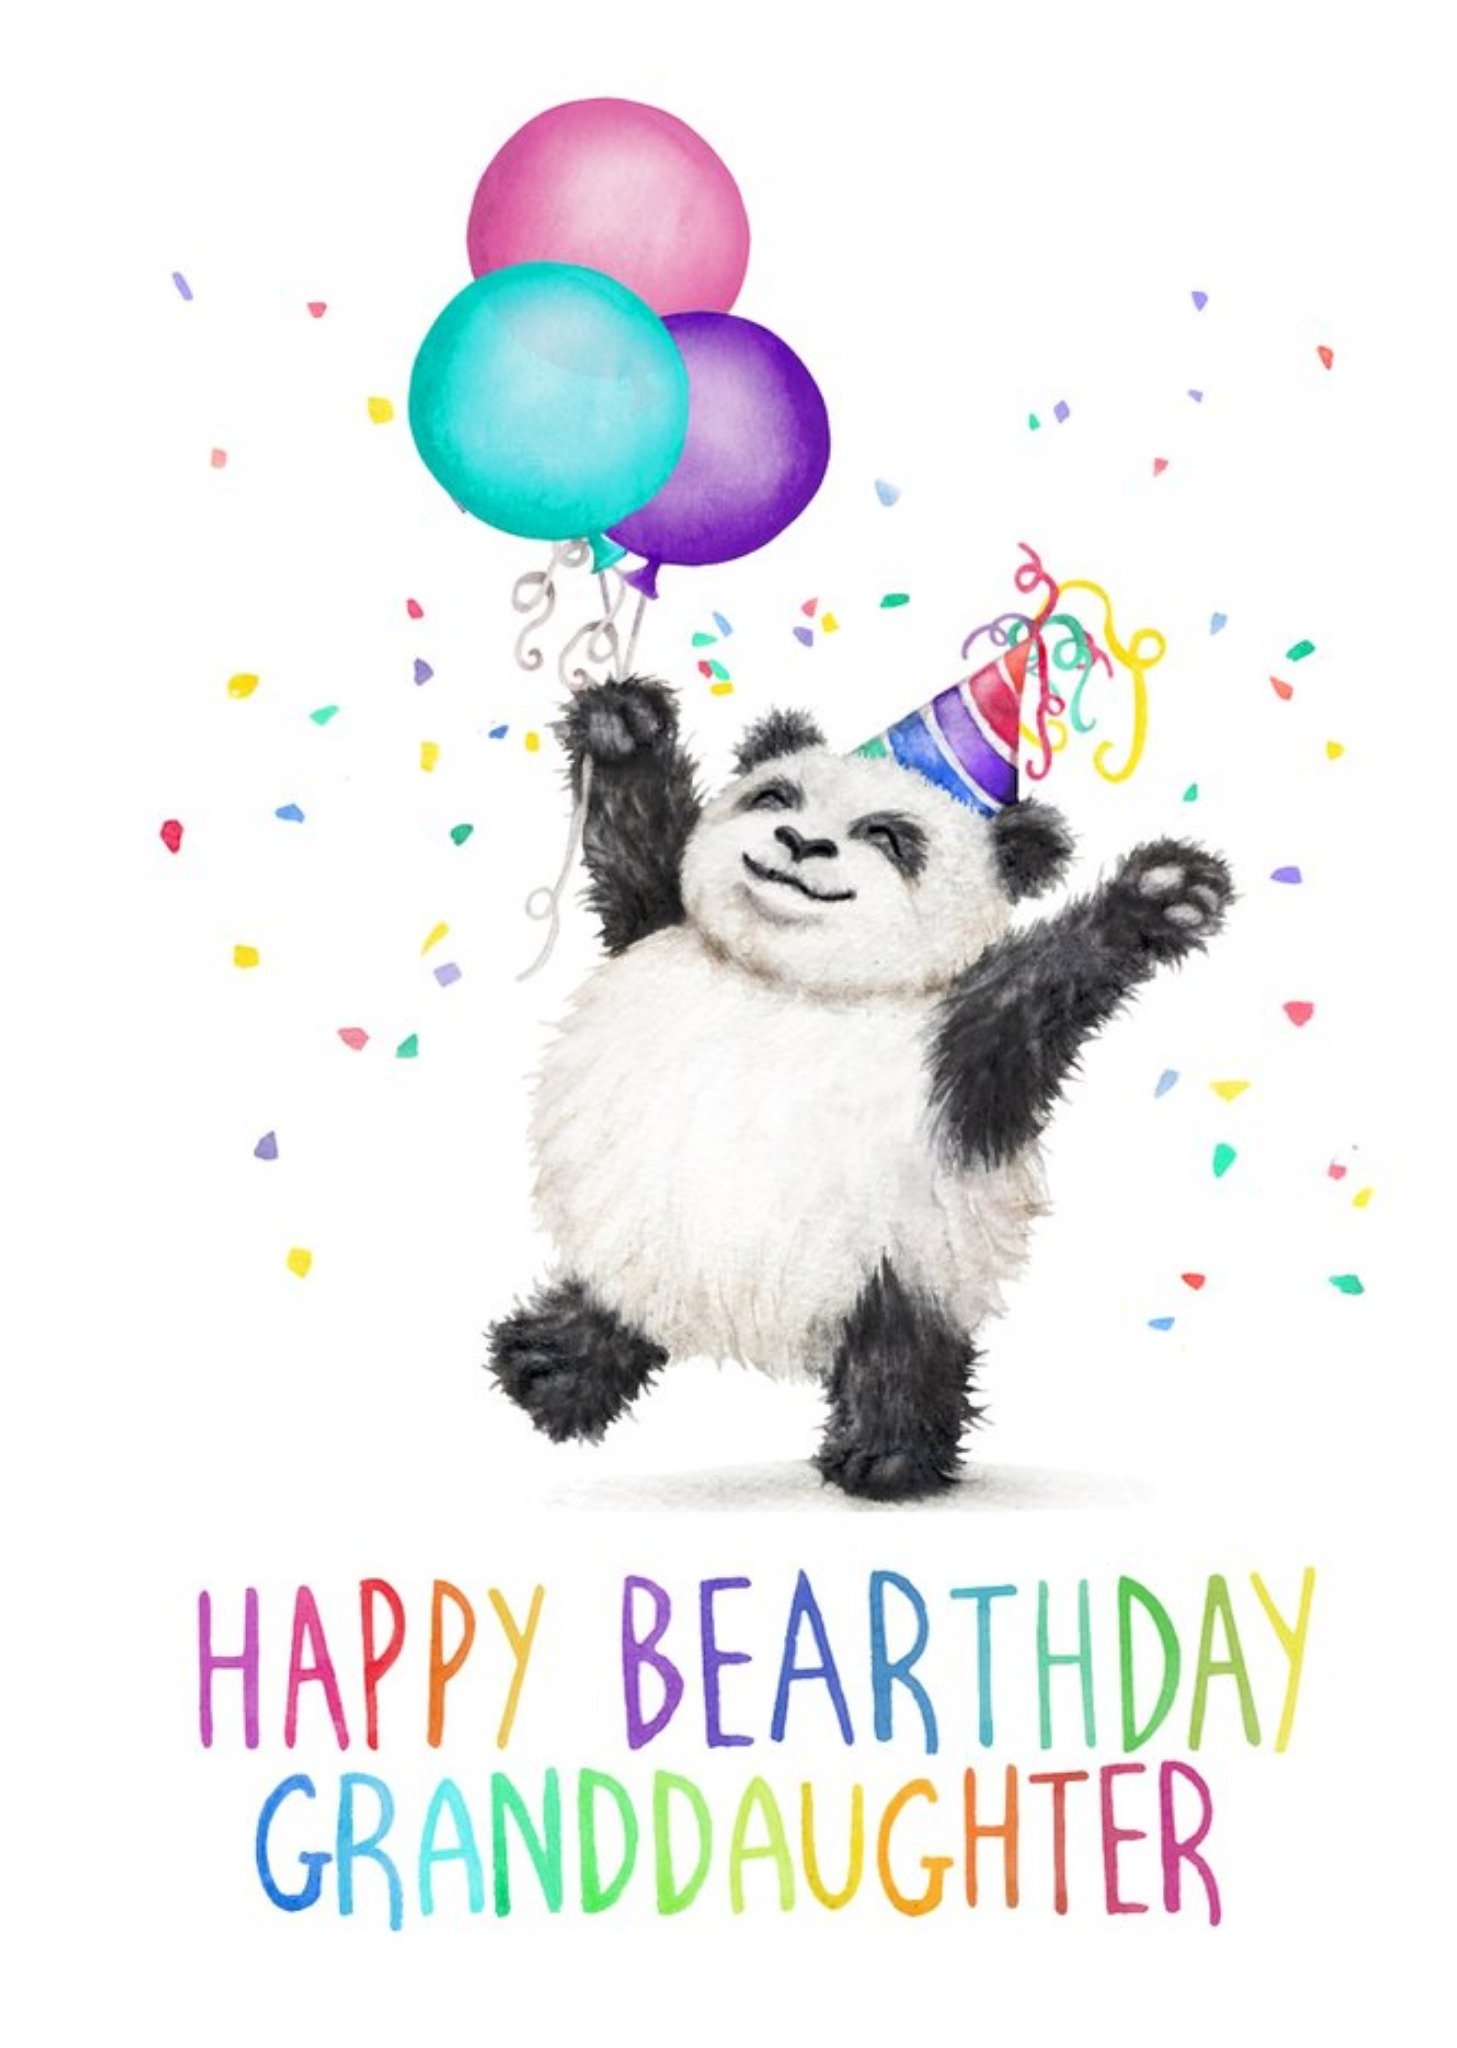 Moonpig Cute Panda Happy Bearthday Granddaughter Birthday Card, Large